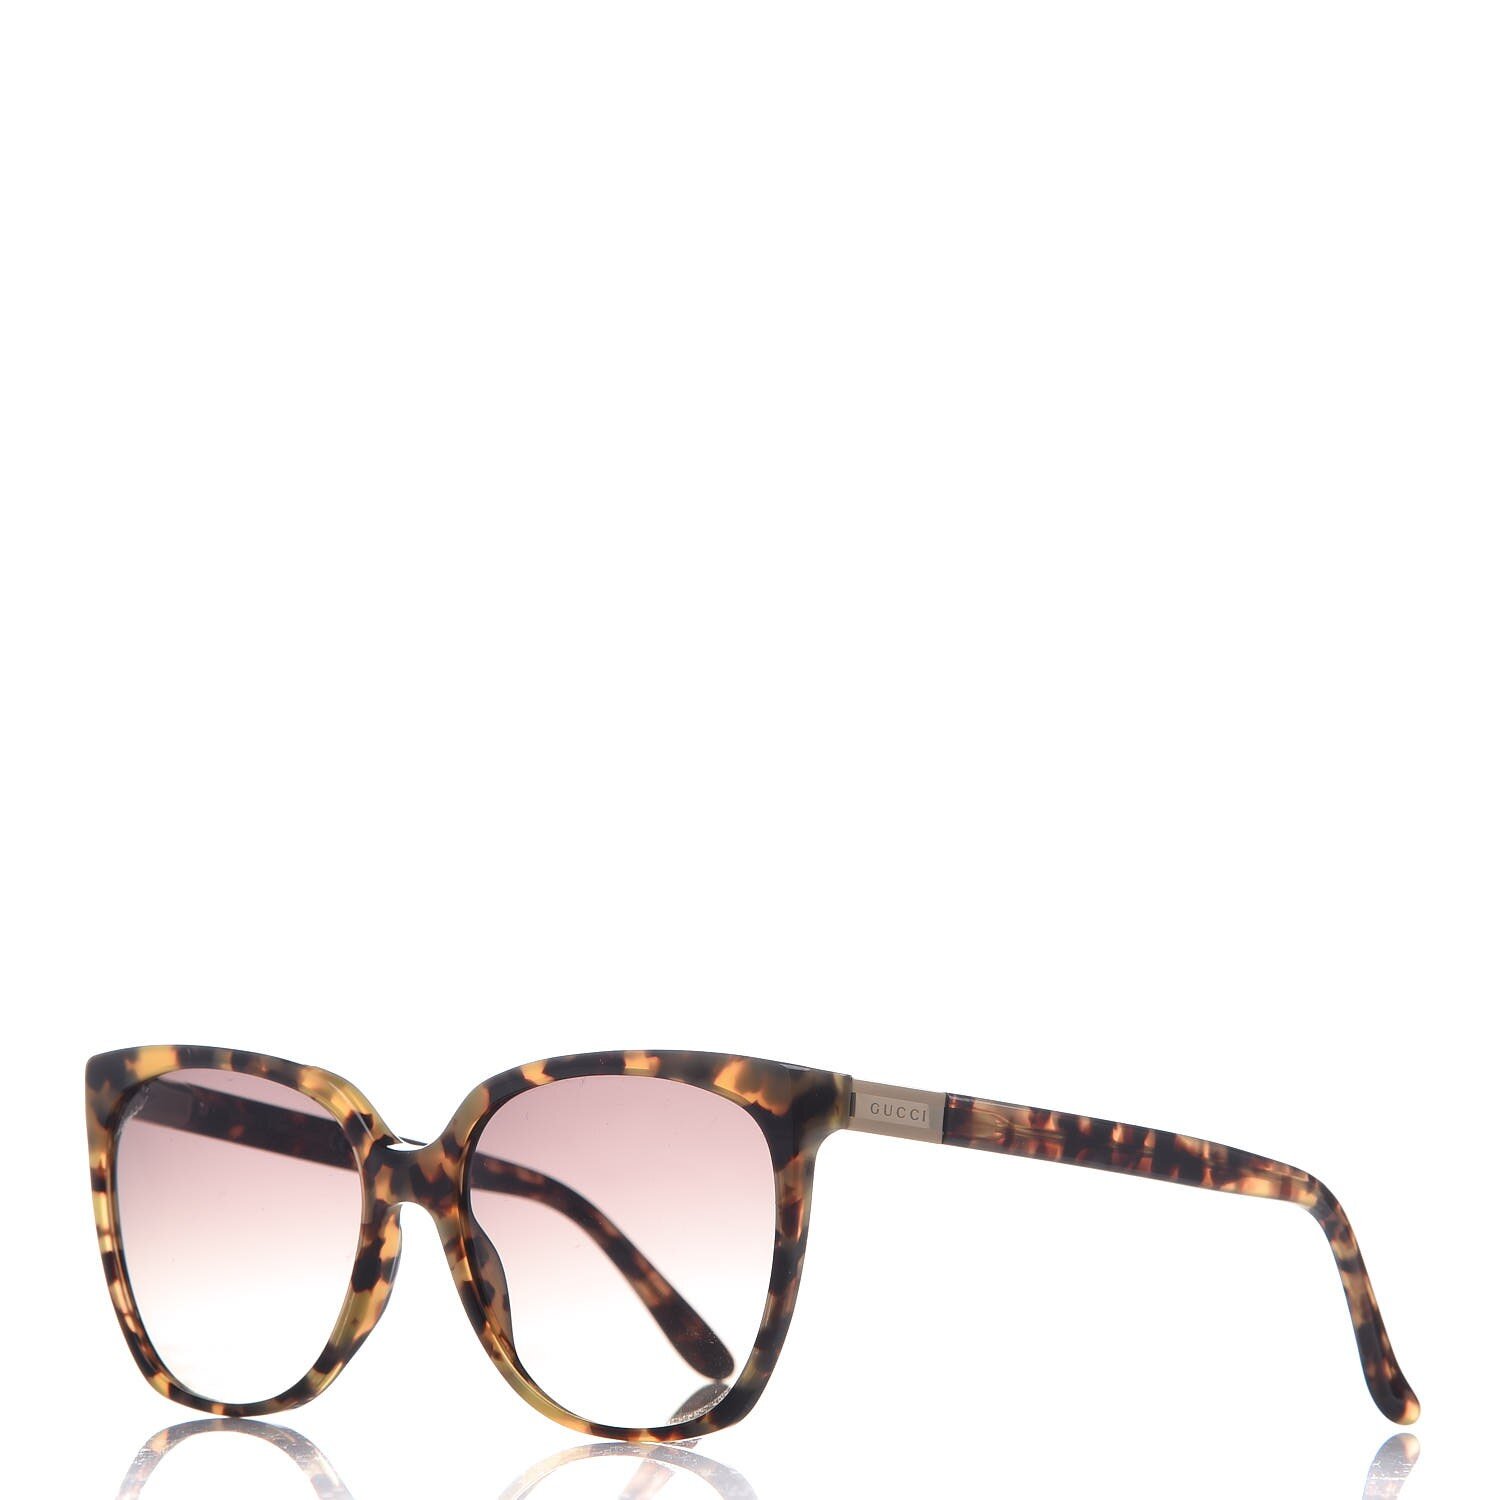 Gucci 3502:S Sunglasses in Tortoiseshell.jpg